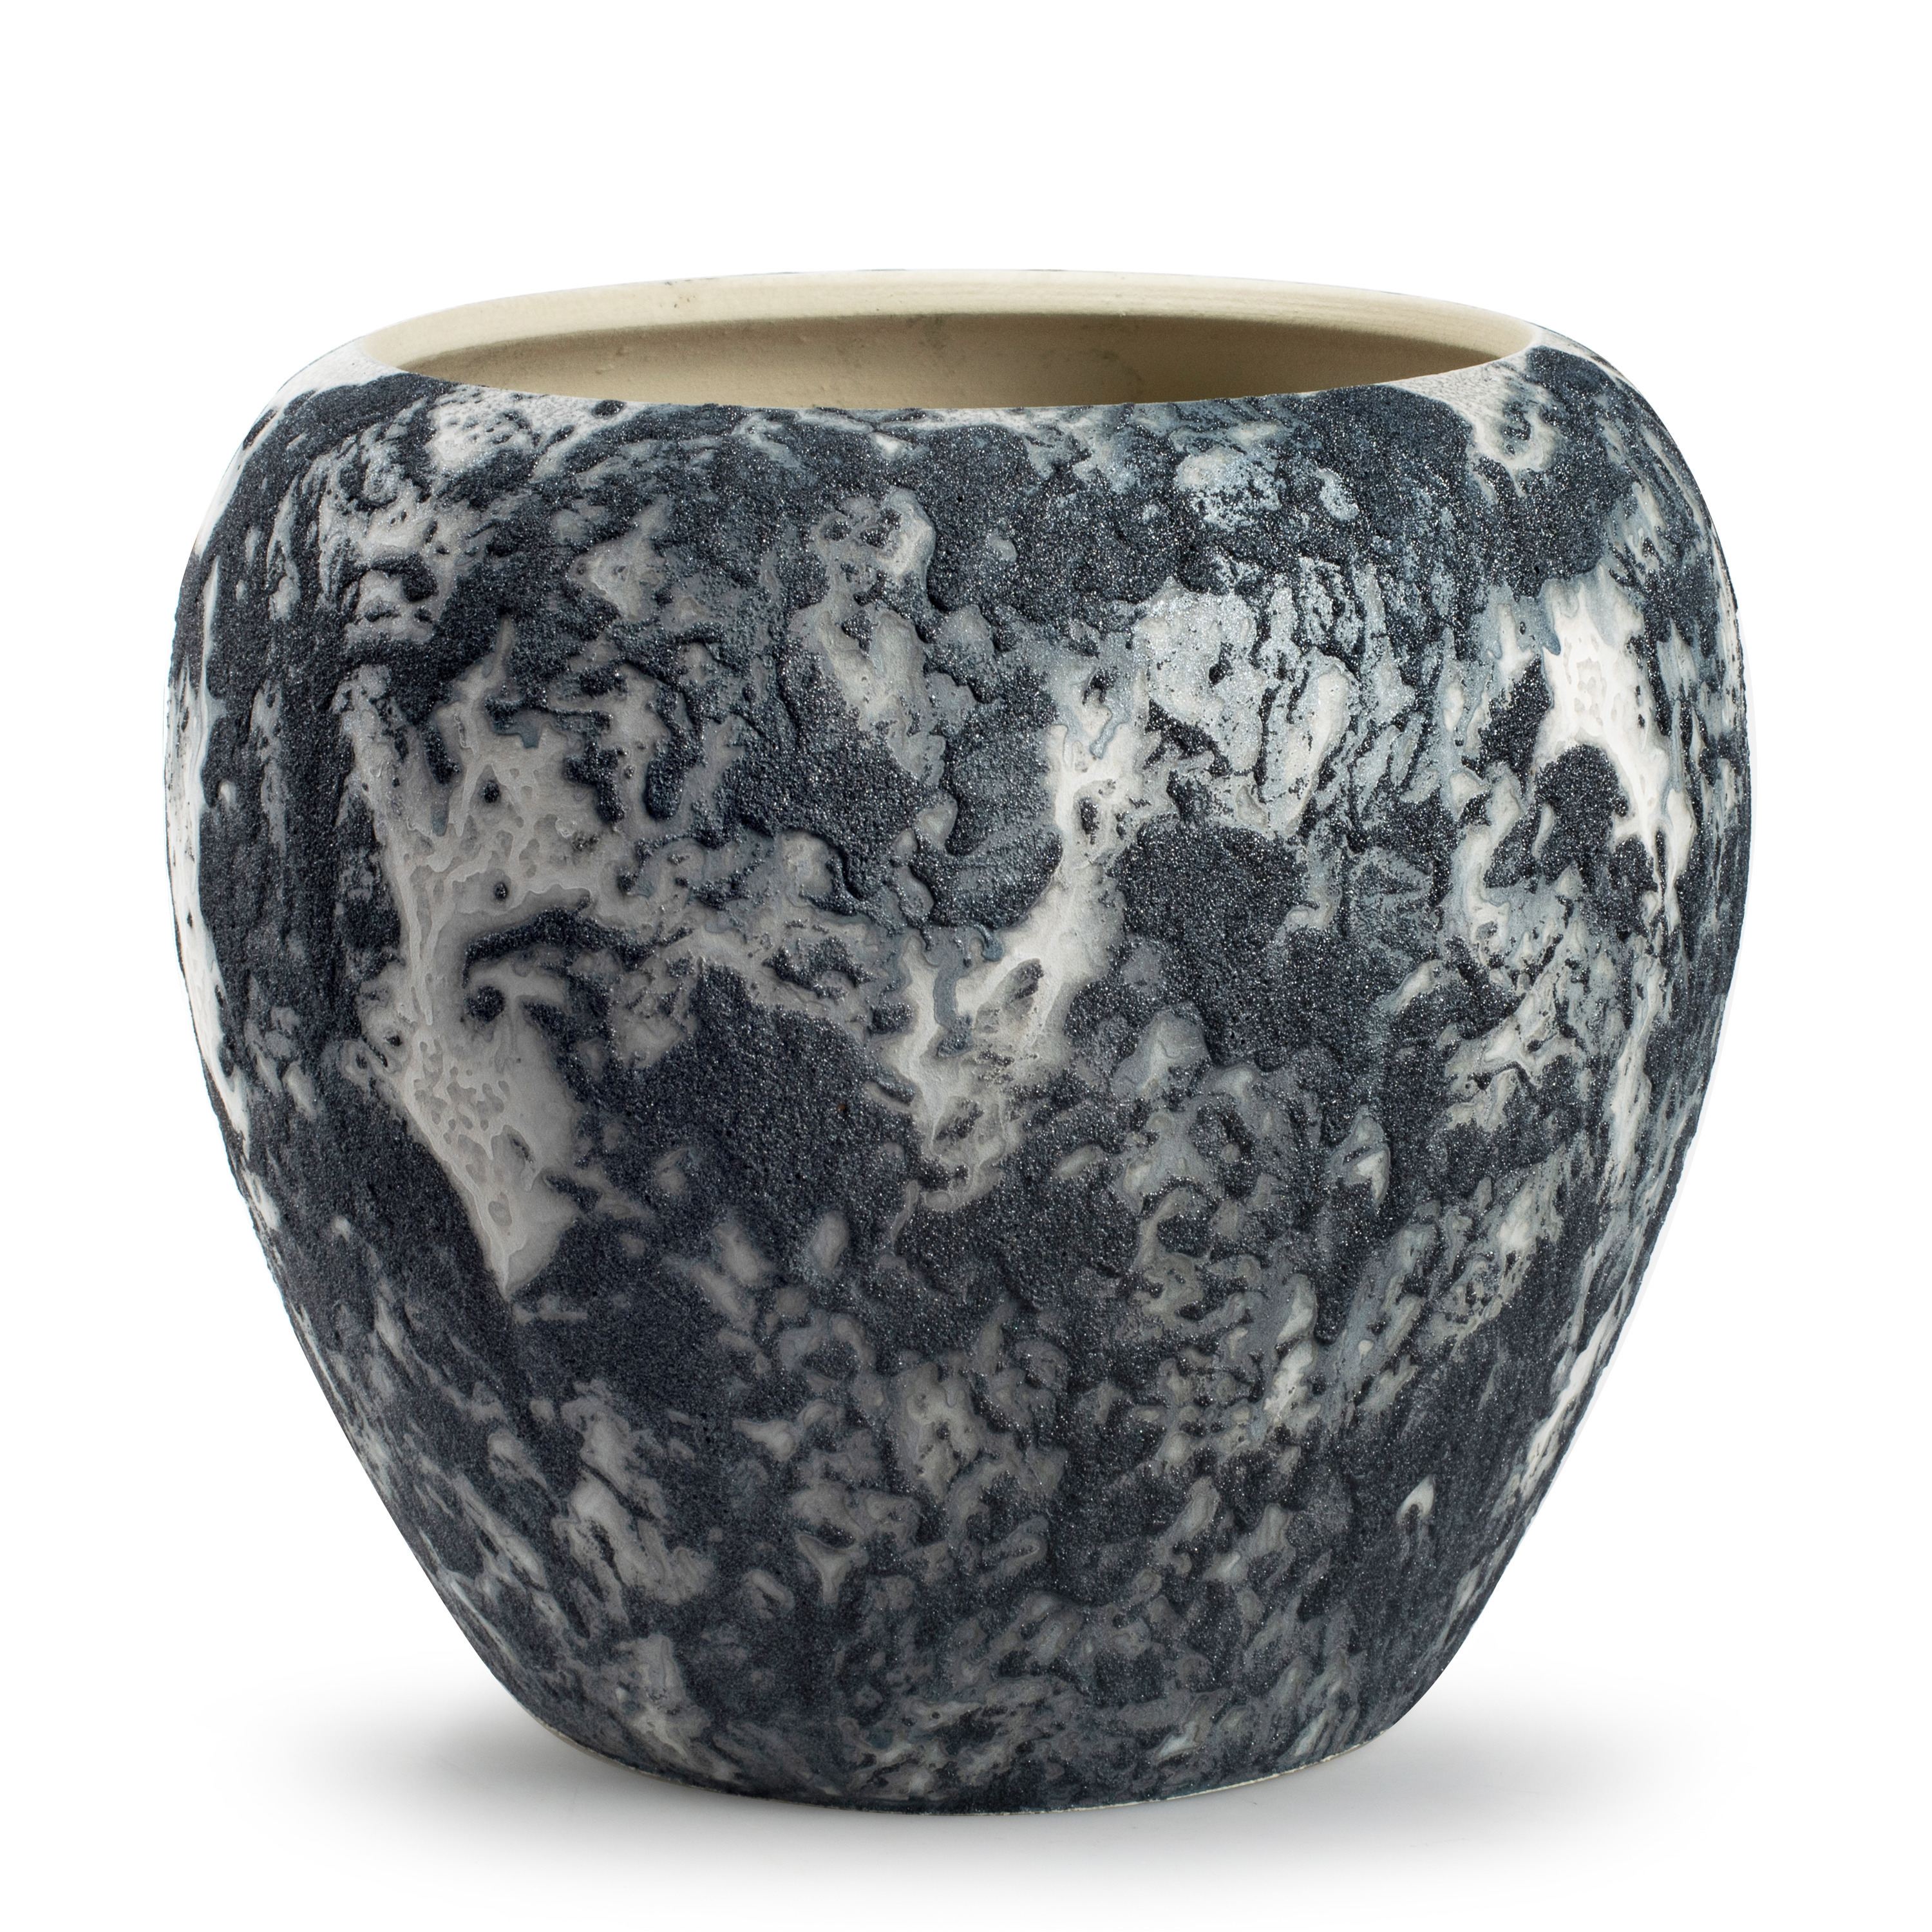 Jodeco Plantenpot/bloempot Marble - wit/zwart - keramiek - D24 x H22 cm -